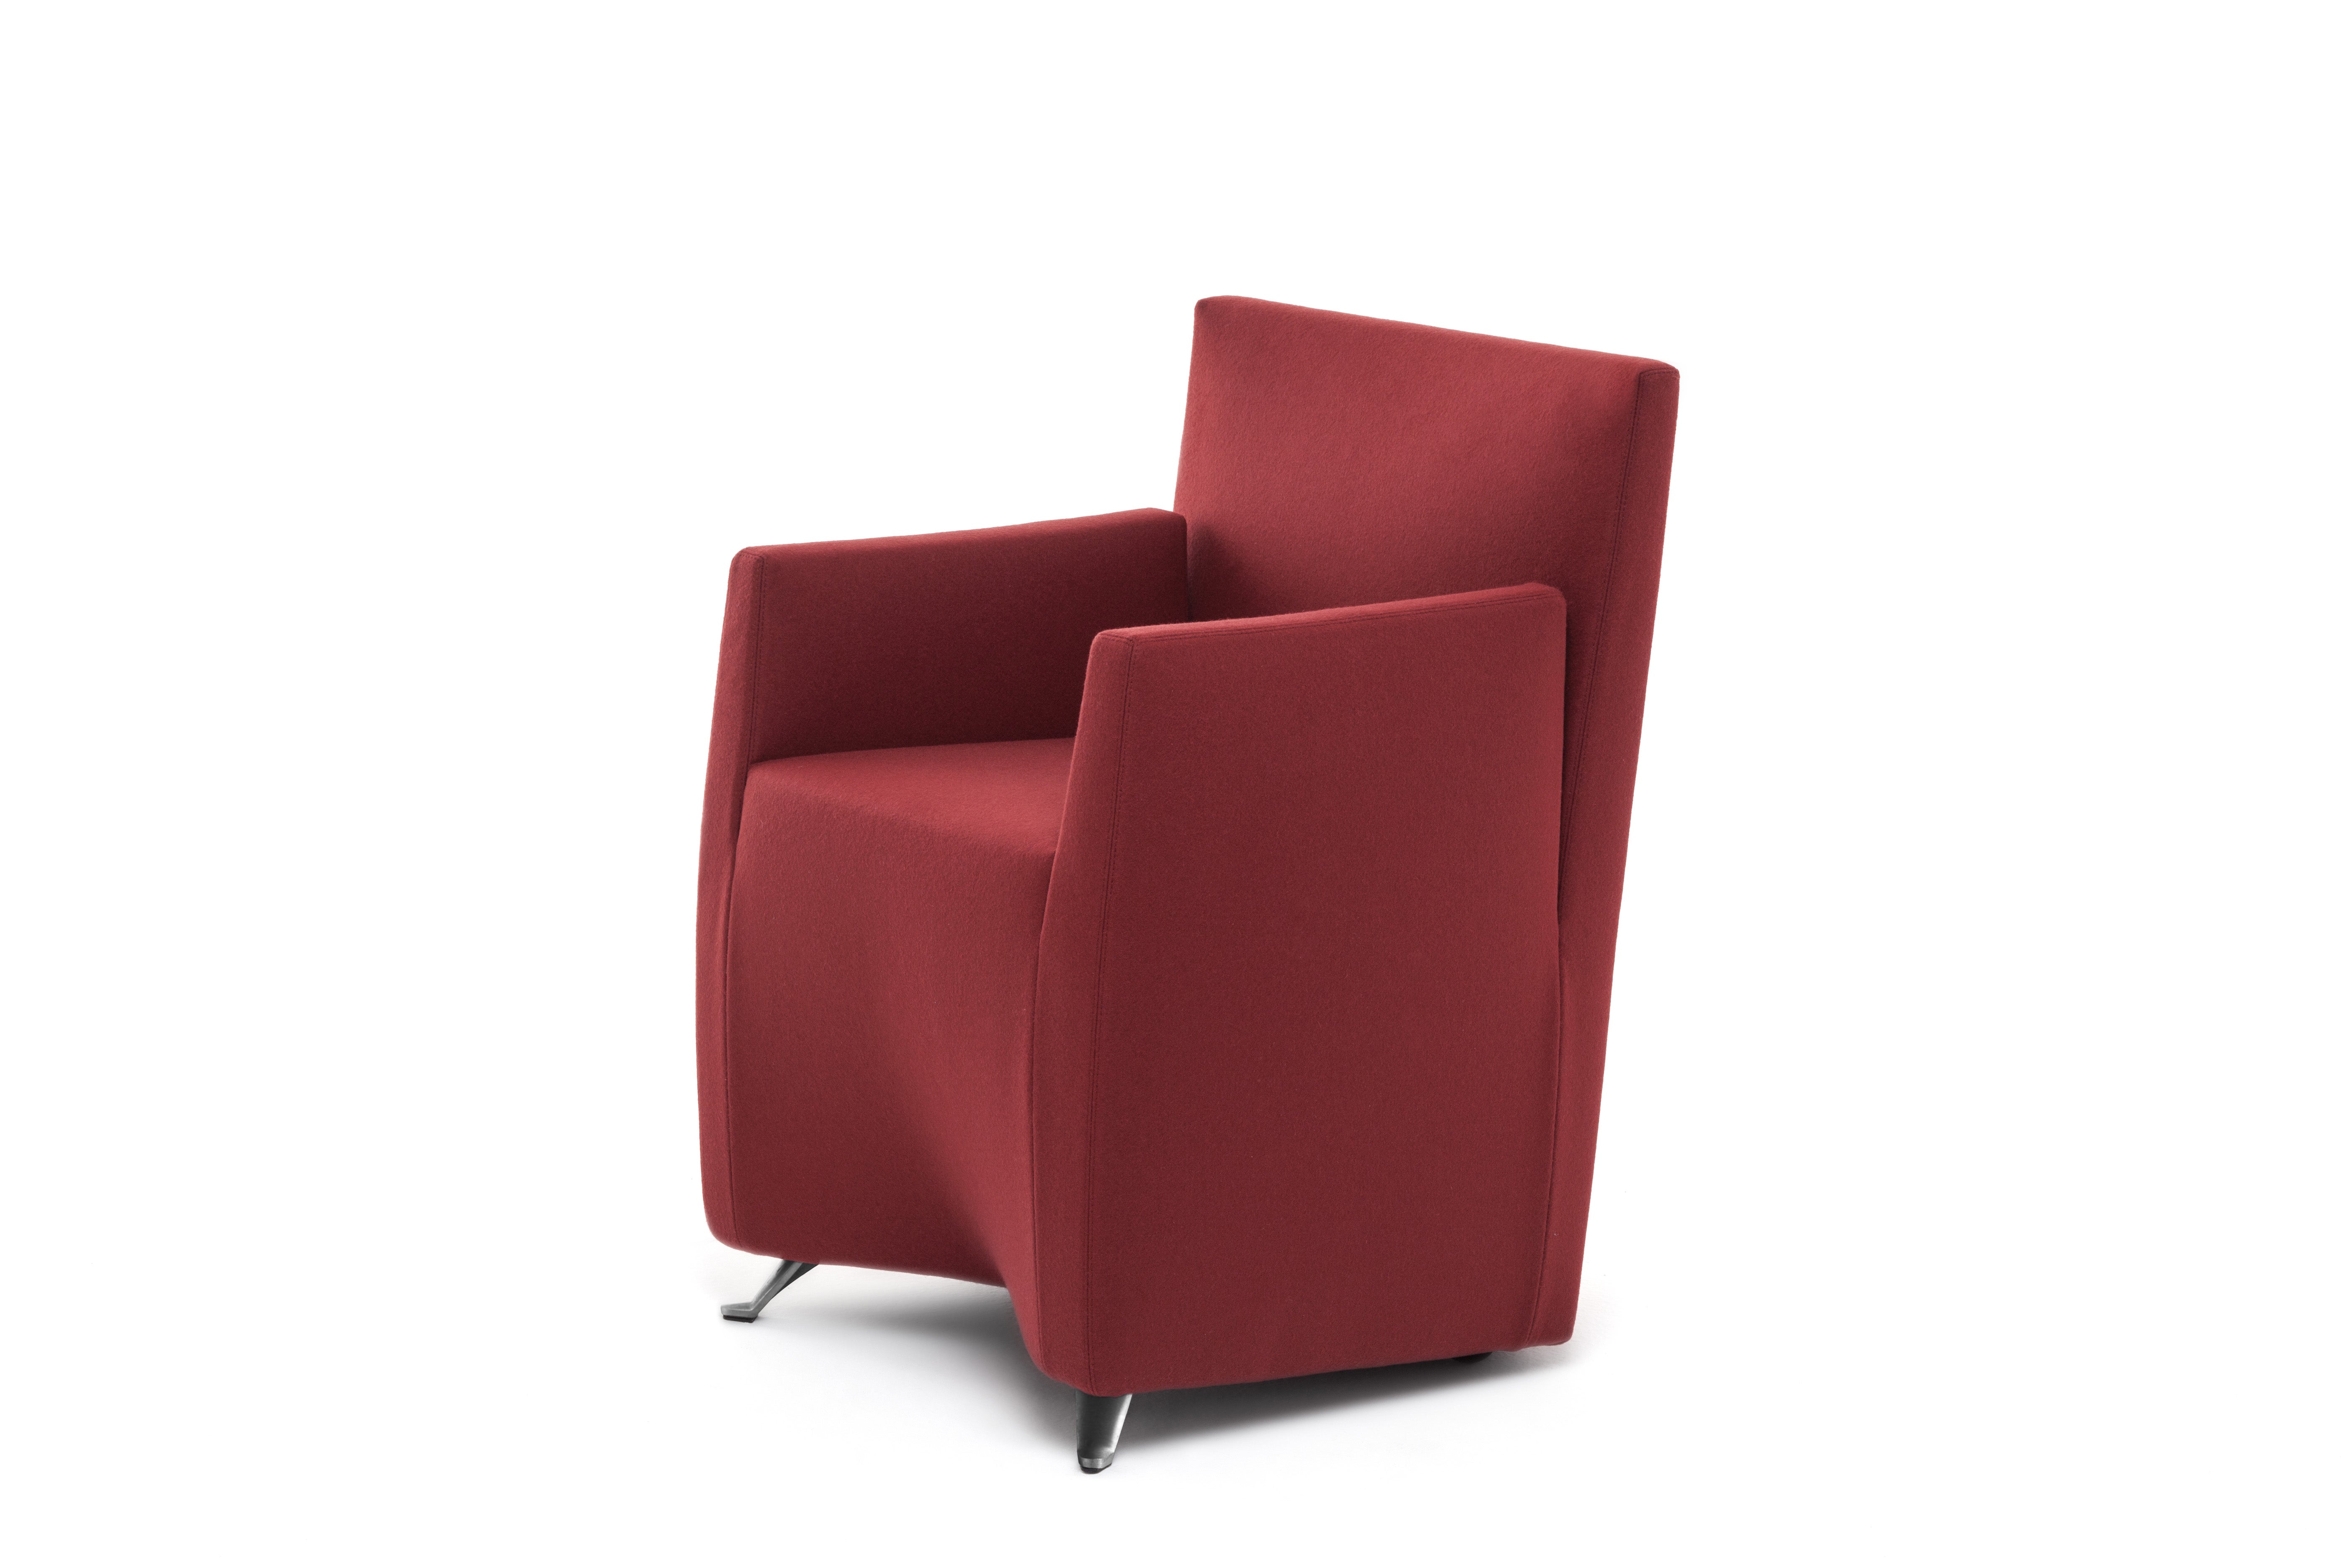  Baleri Italia Caprichair Armchair in Red Fabric by Hannes Wettstein For Sale